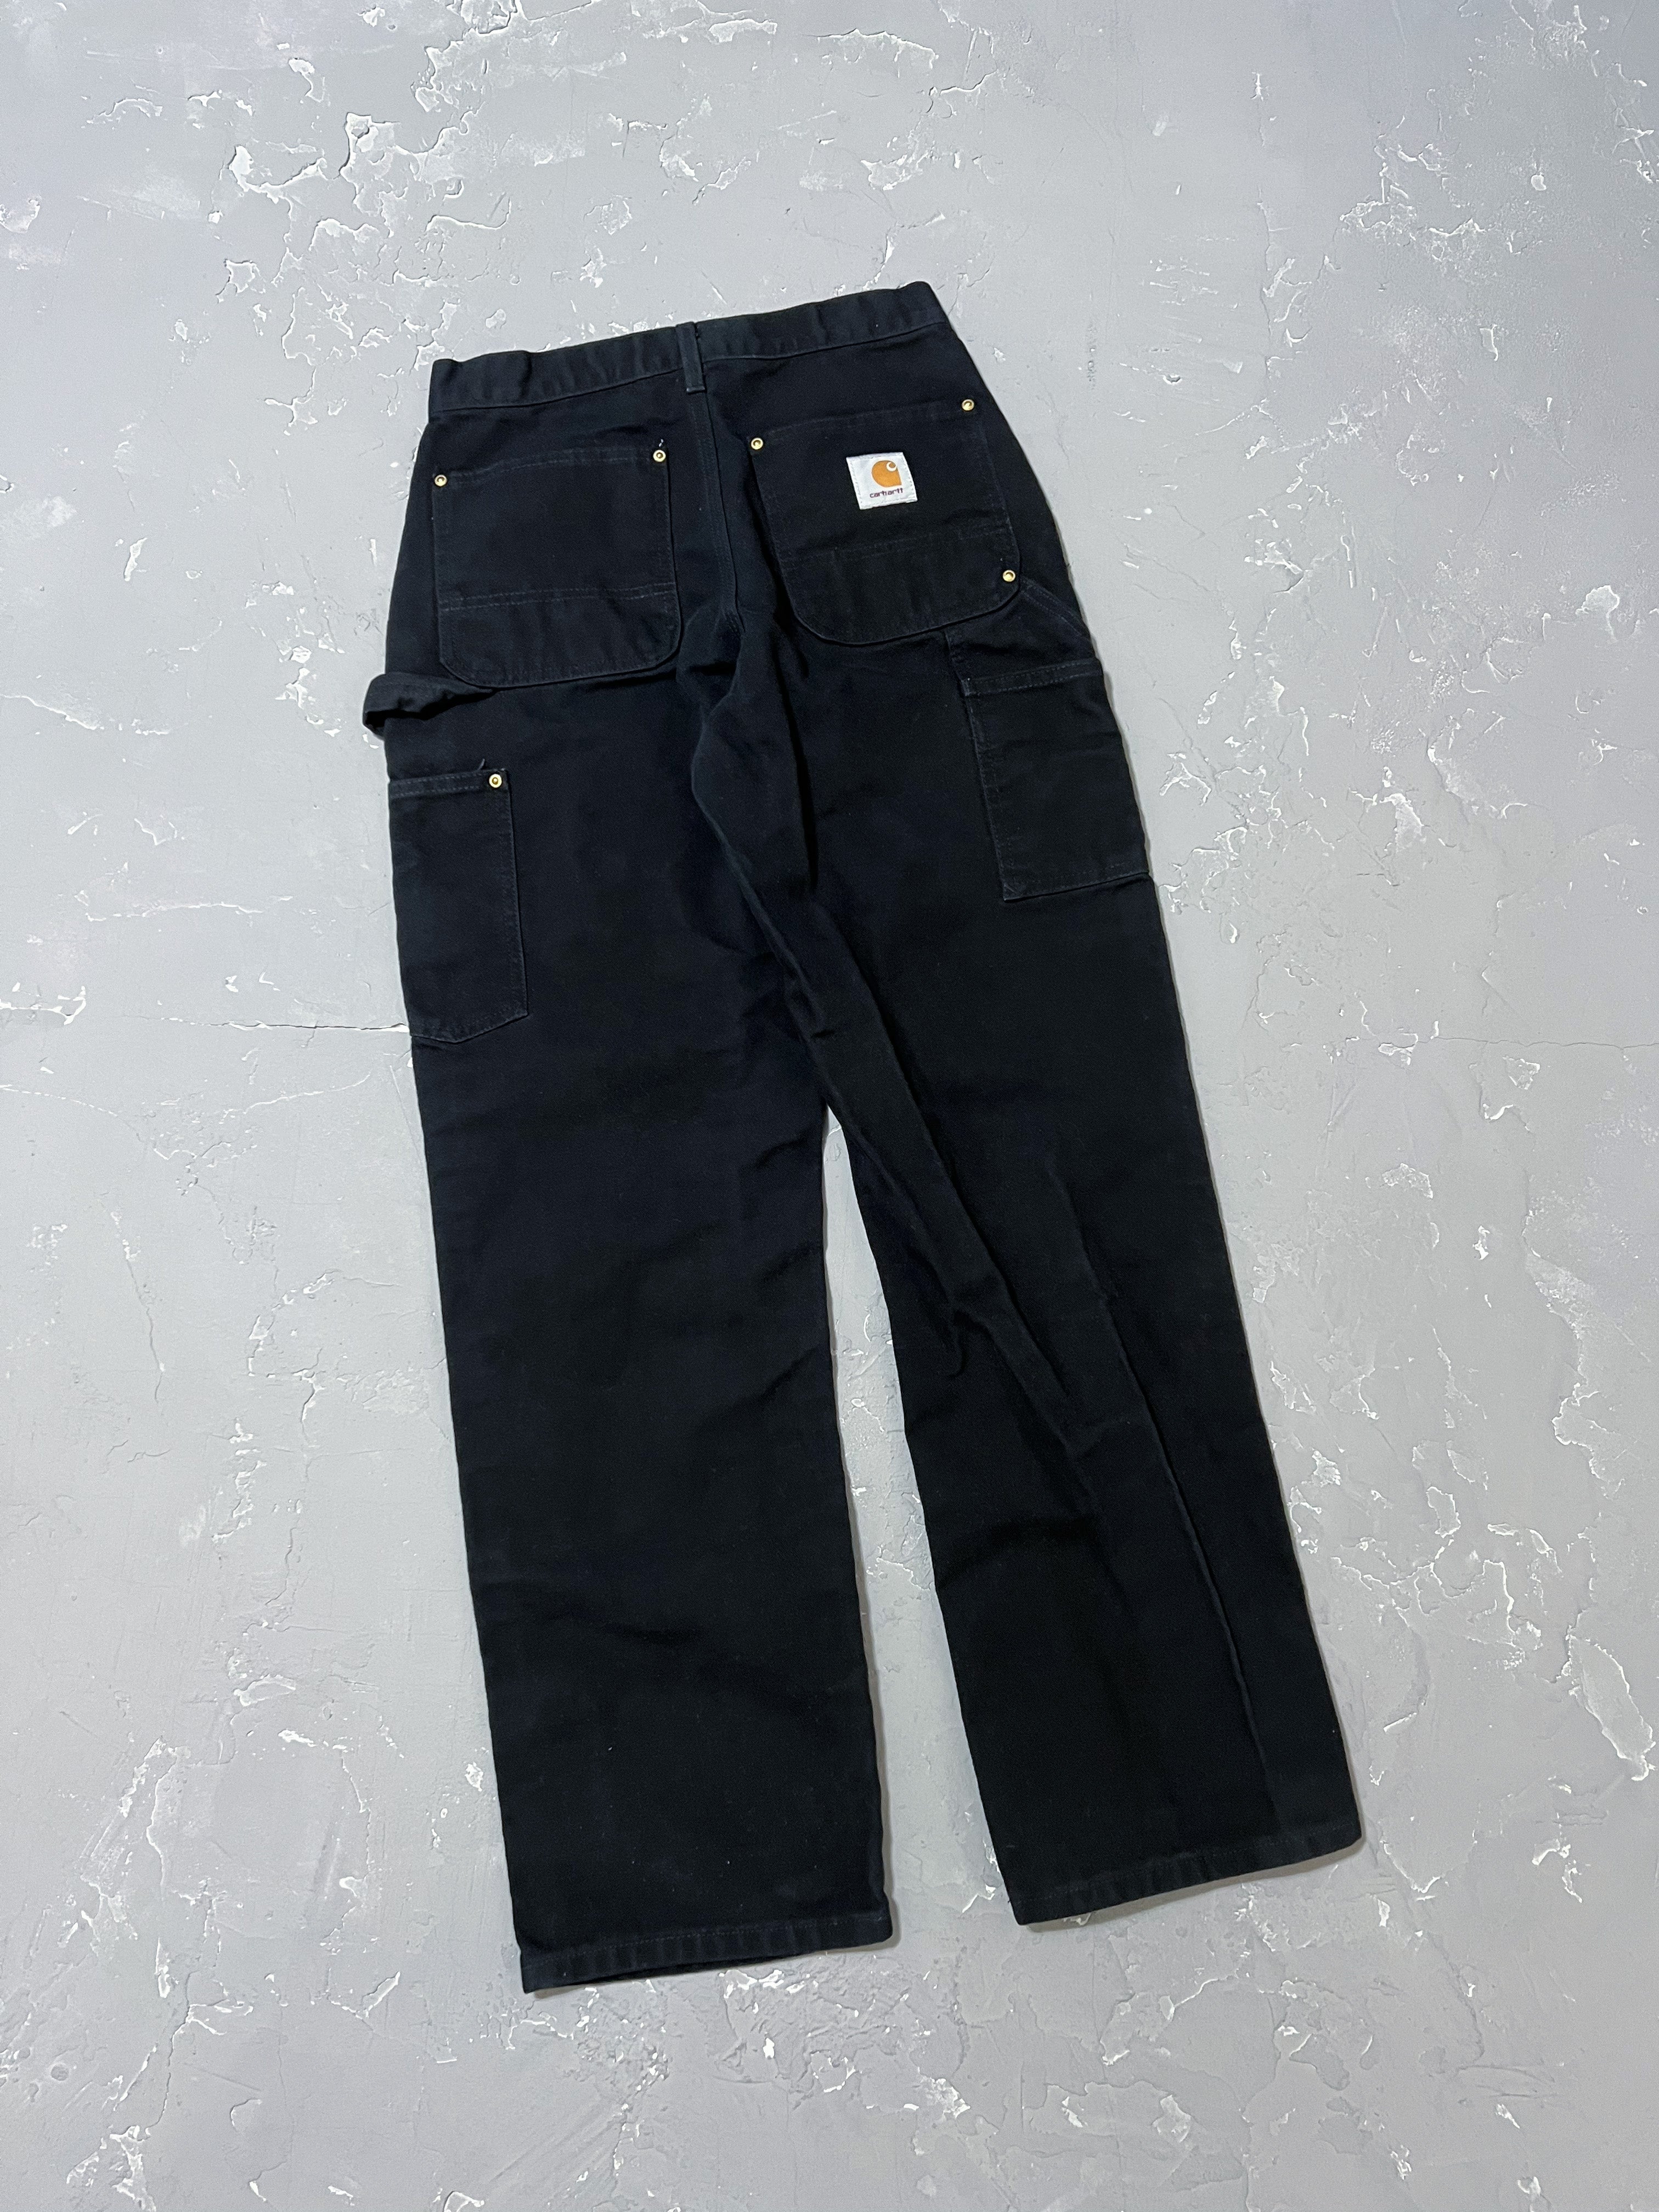 Carhartt Black Double Knee Pants [27 x 30]